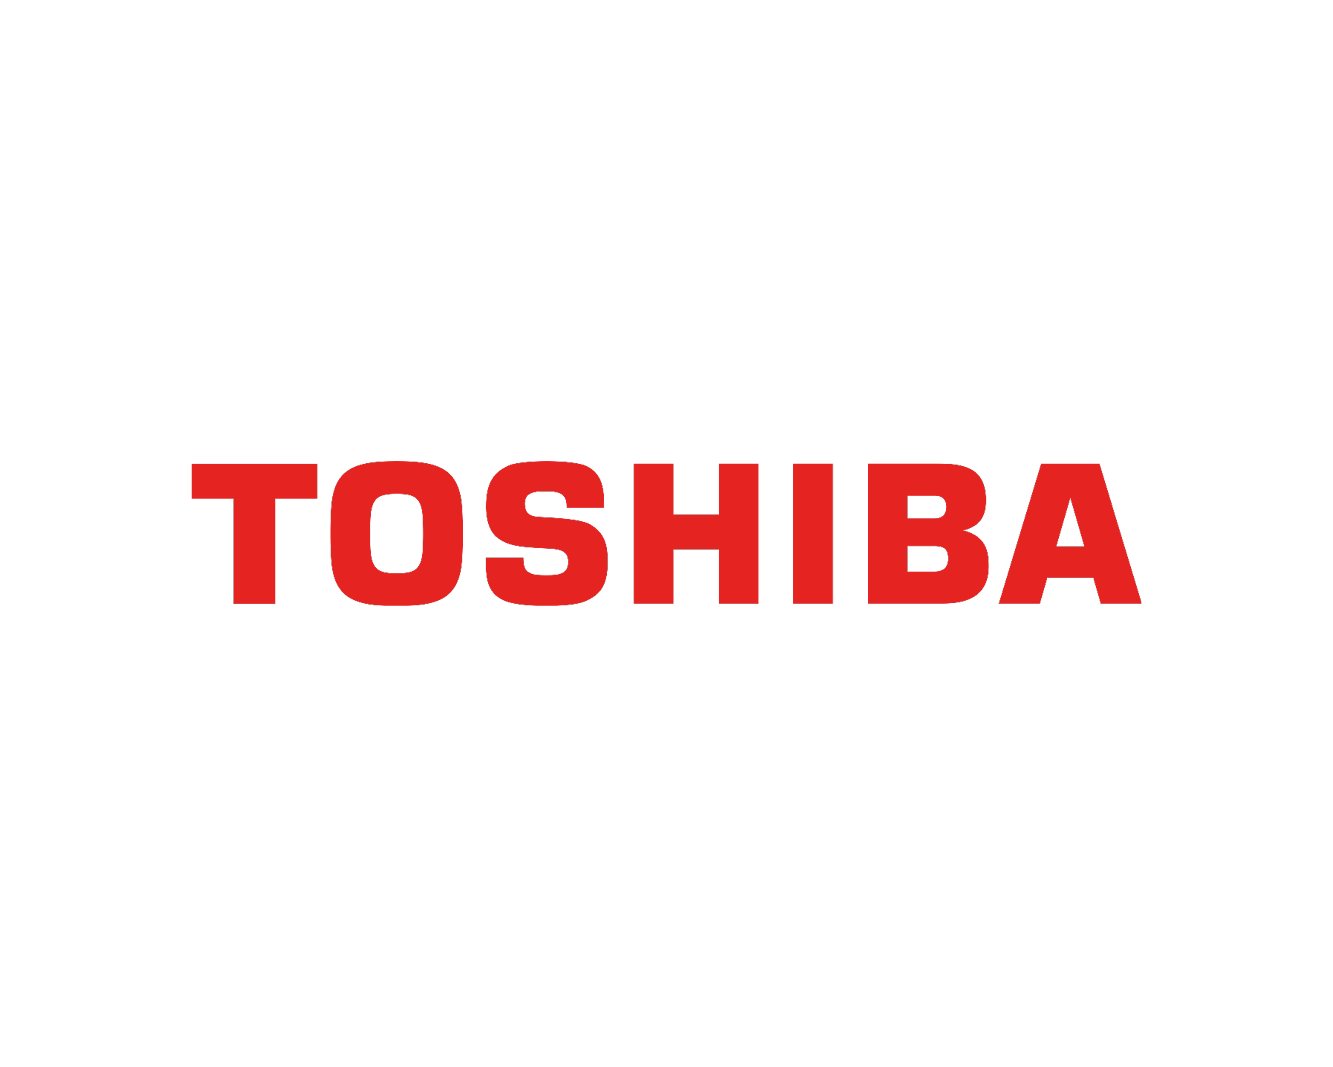 Toshiba : Brand Short Description Type Here.